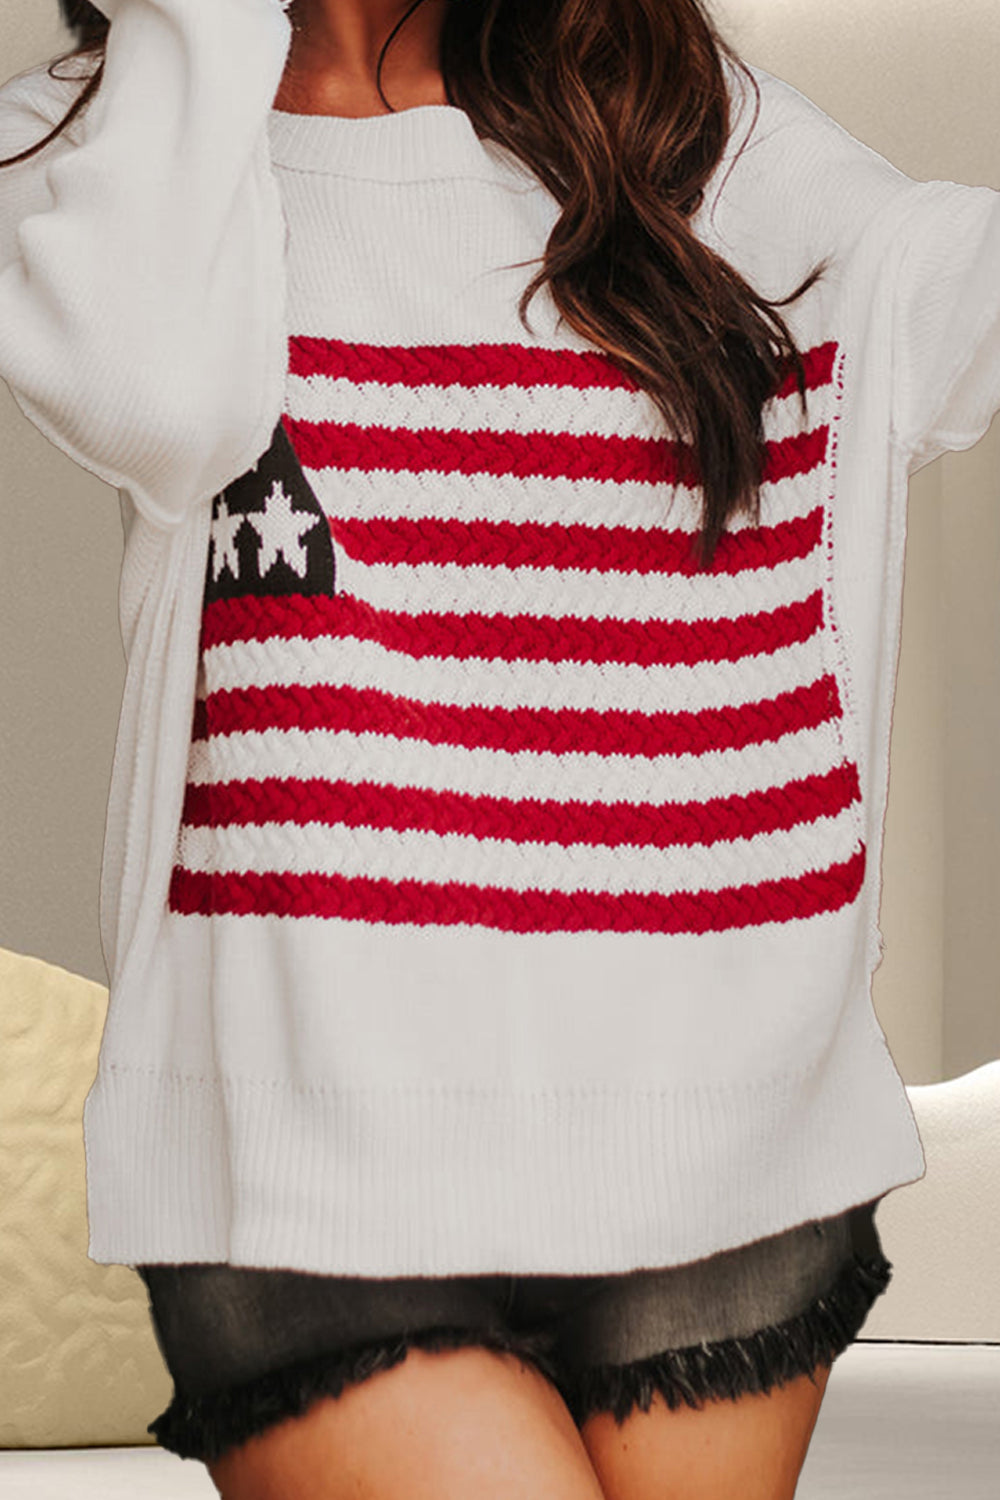 US Flag Round Neck Long Sleeve Knit Sweater